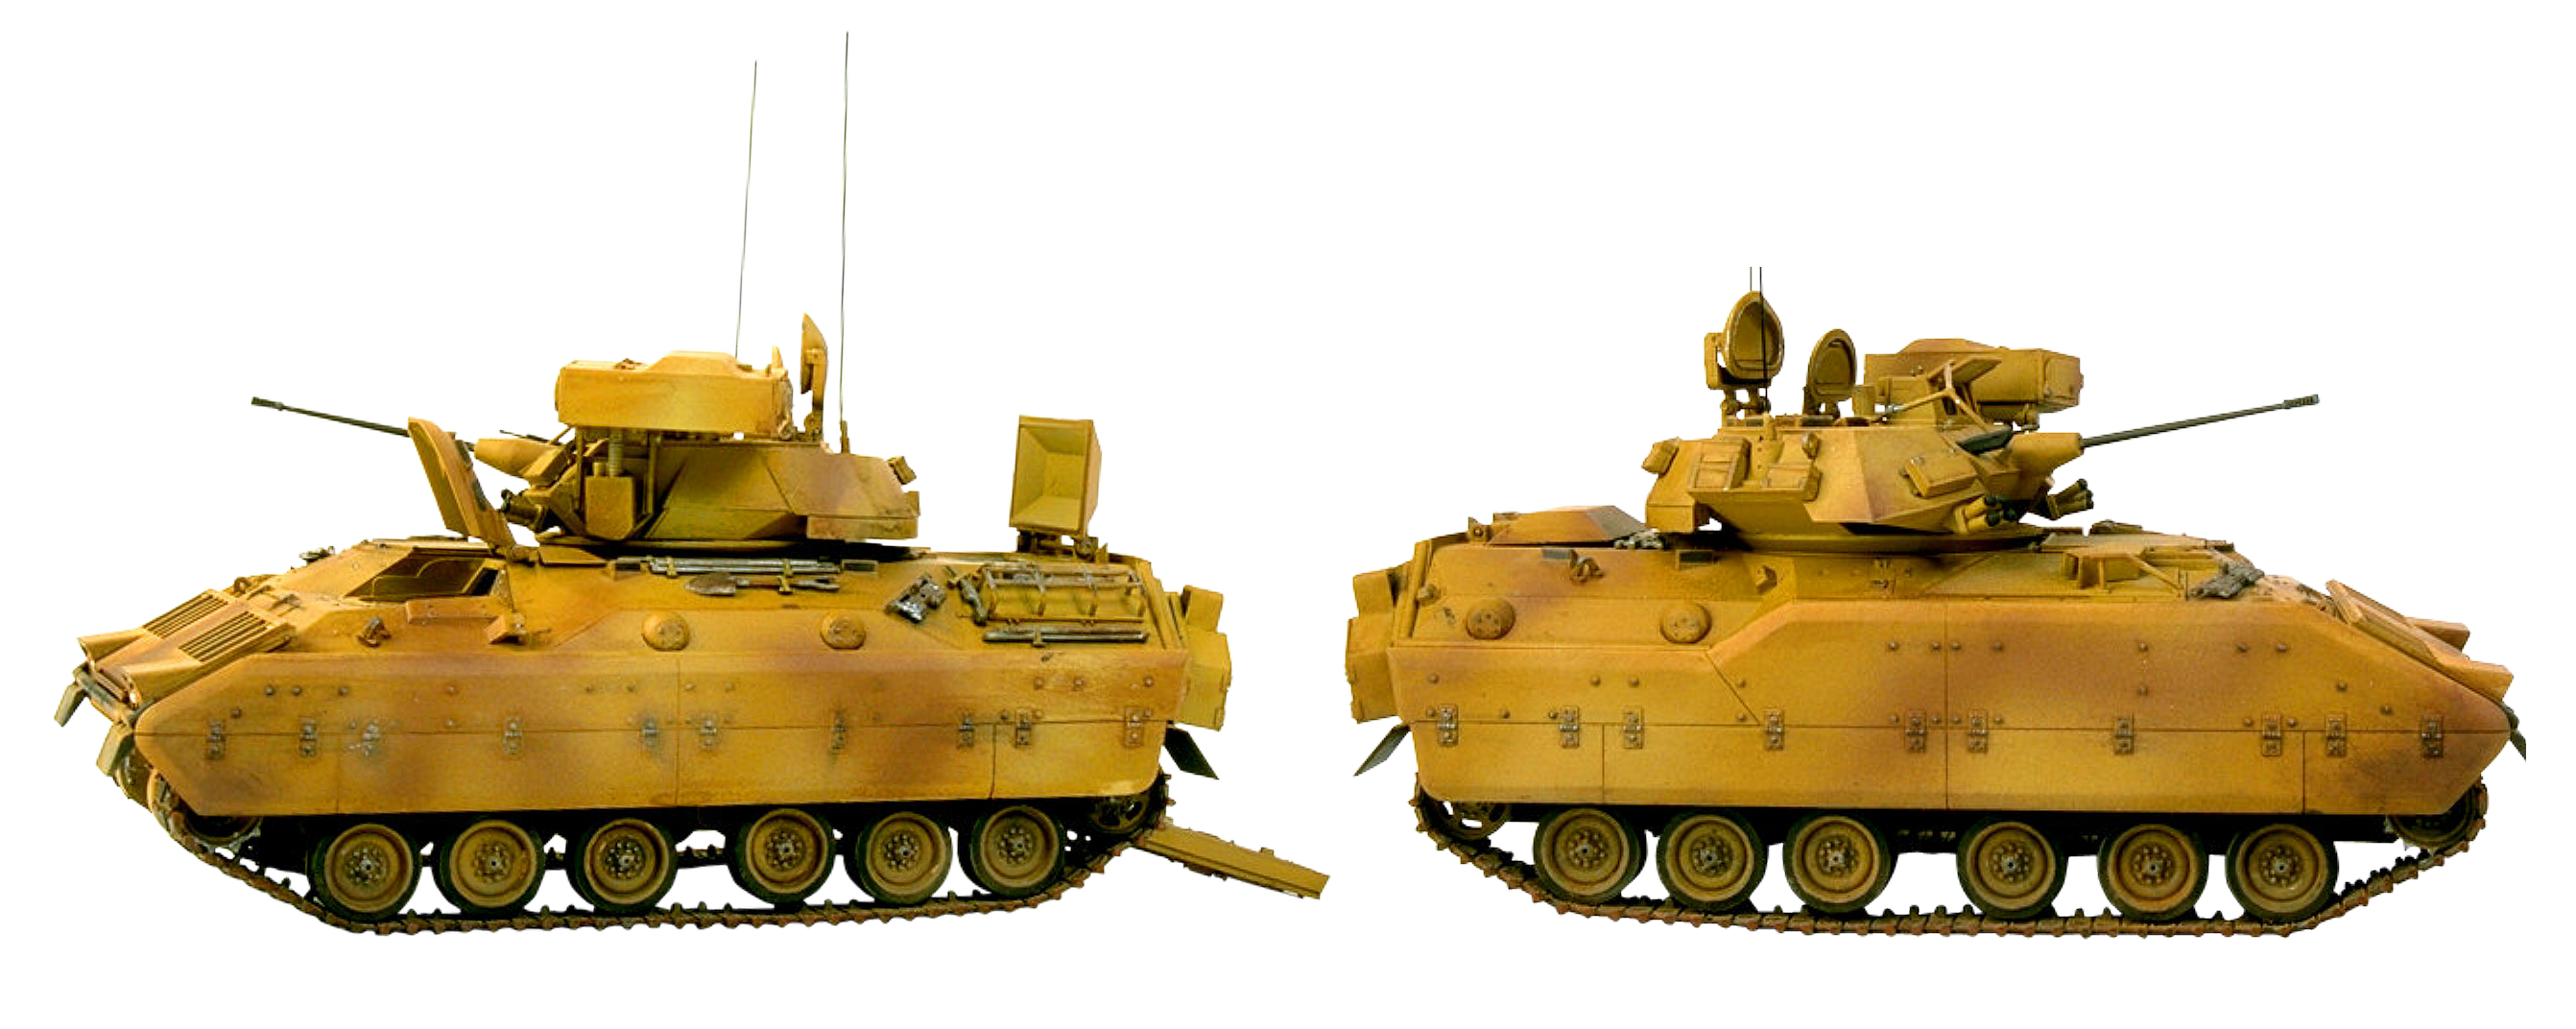 Military tanks photo